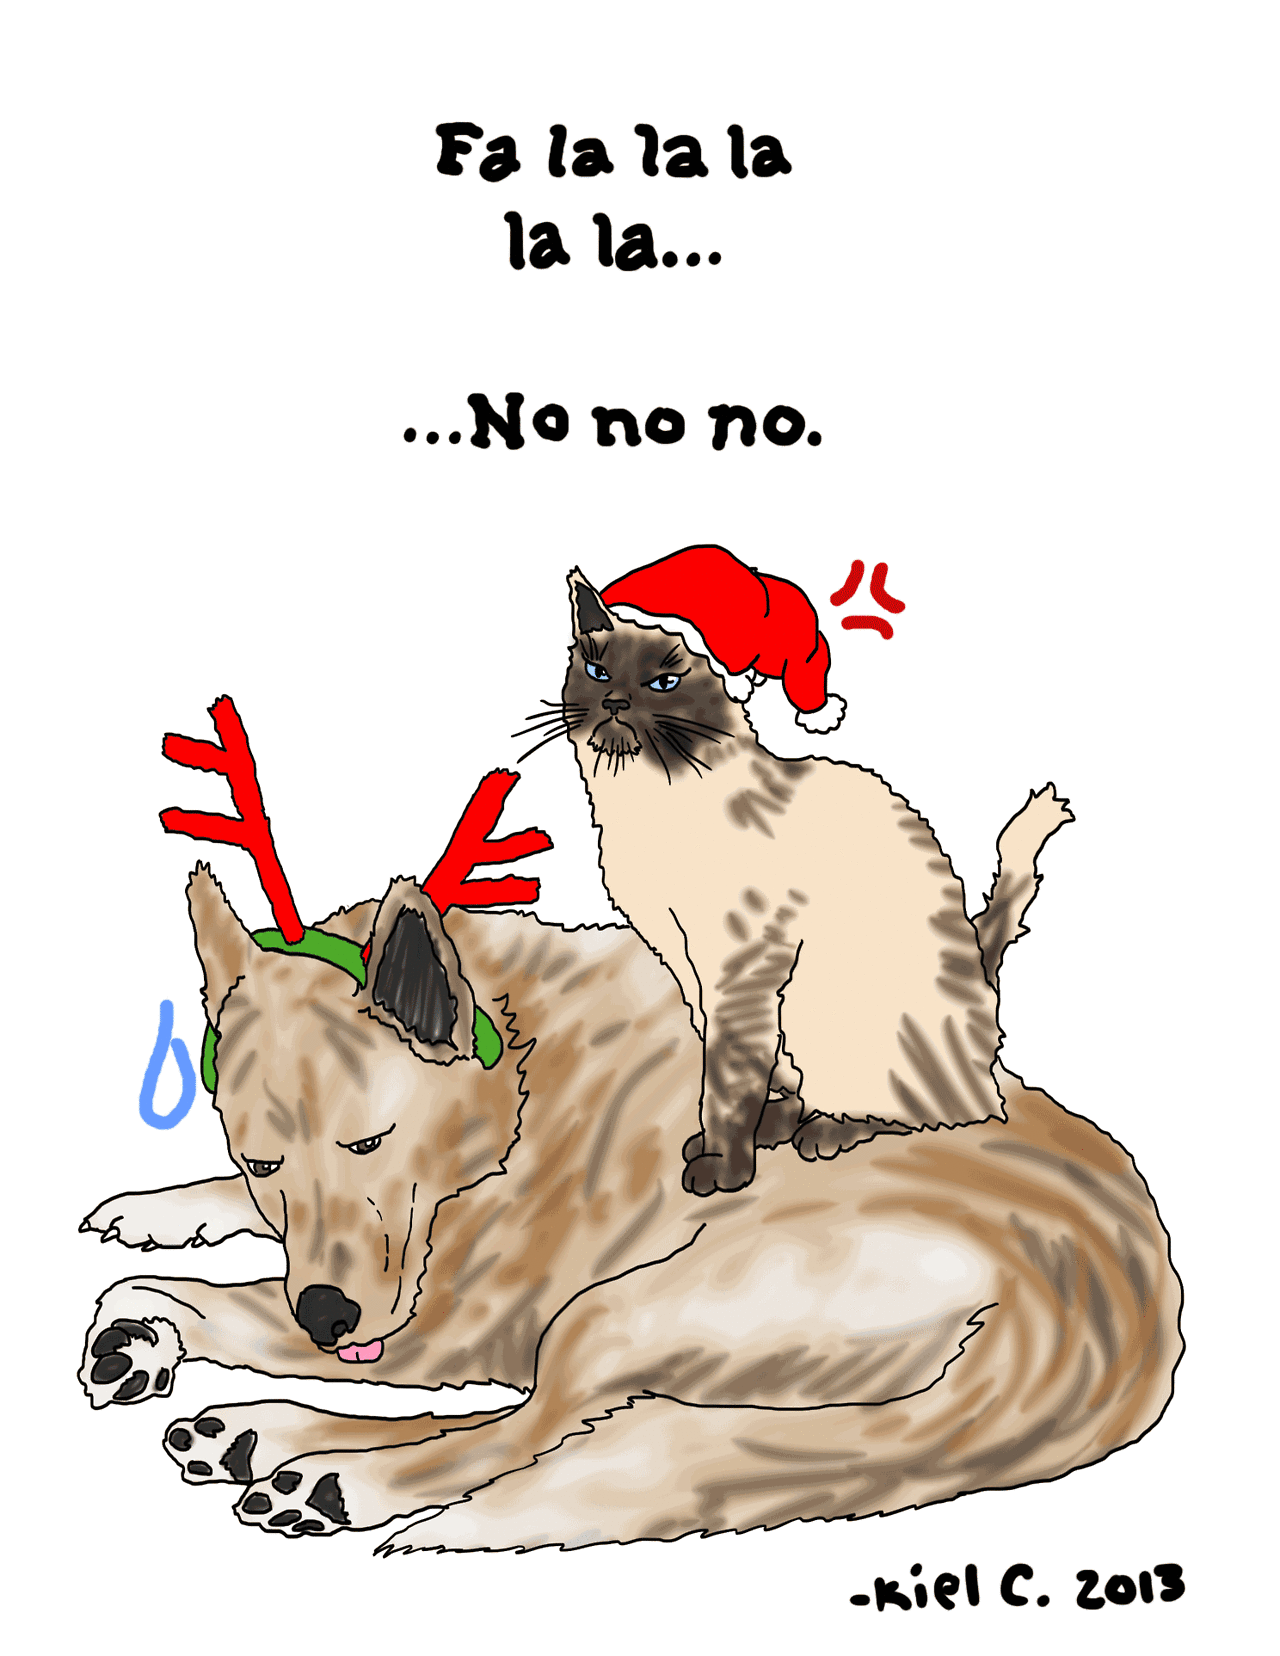 einhorn,merry christmas,christmas,illustration,artists on tumblr,minecraft,creepers,dog,cat